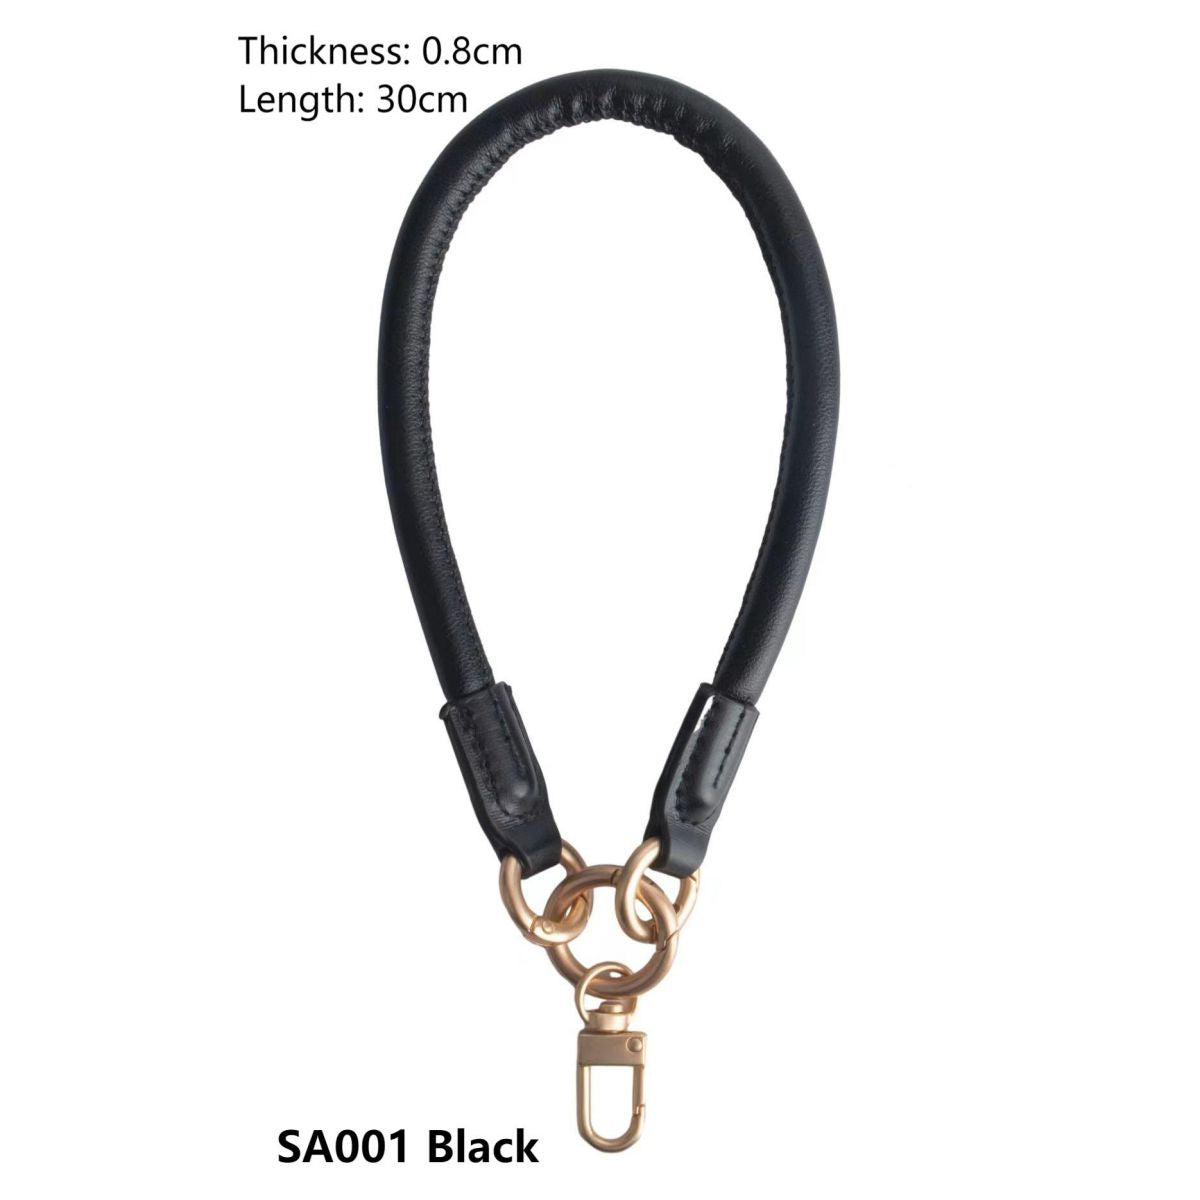 Leather Wrist Strap SA001 Black - Hugmie